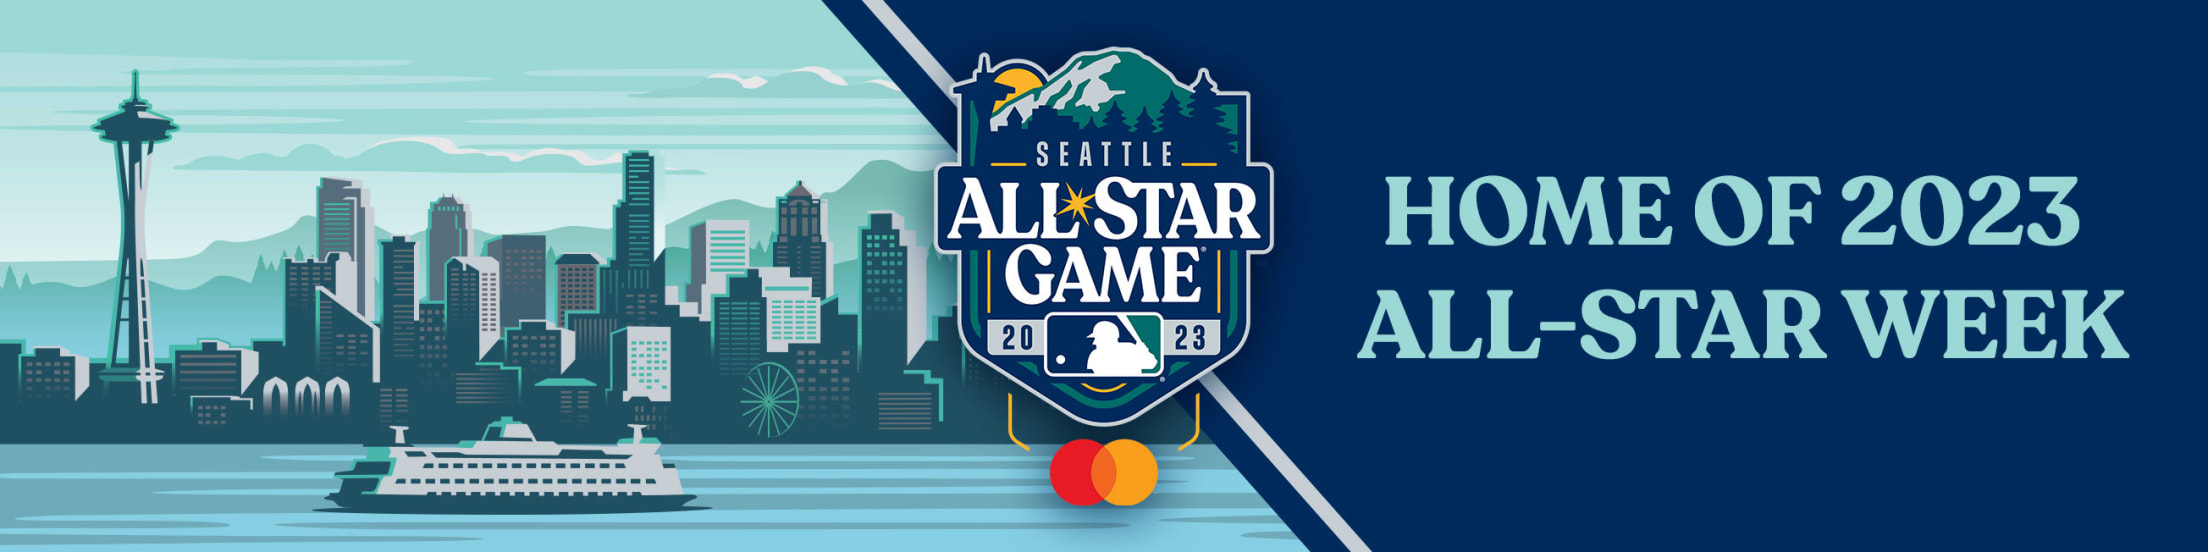 Ken Griffey Jr American League 2023 MLB All Star Game Teal Jersey